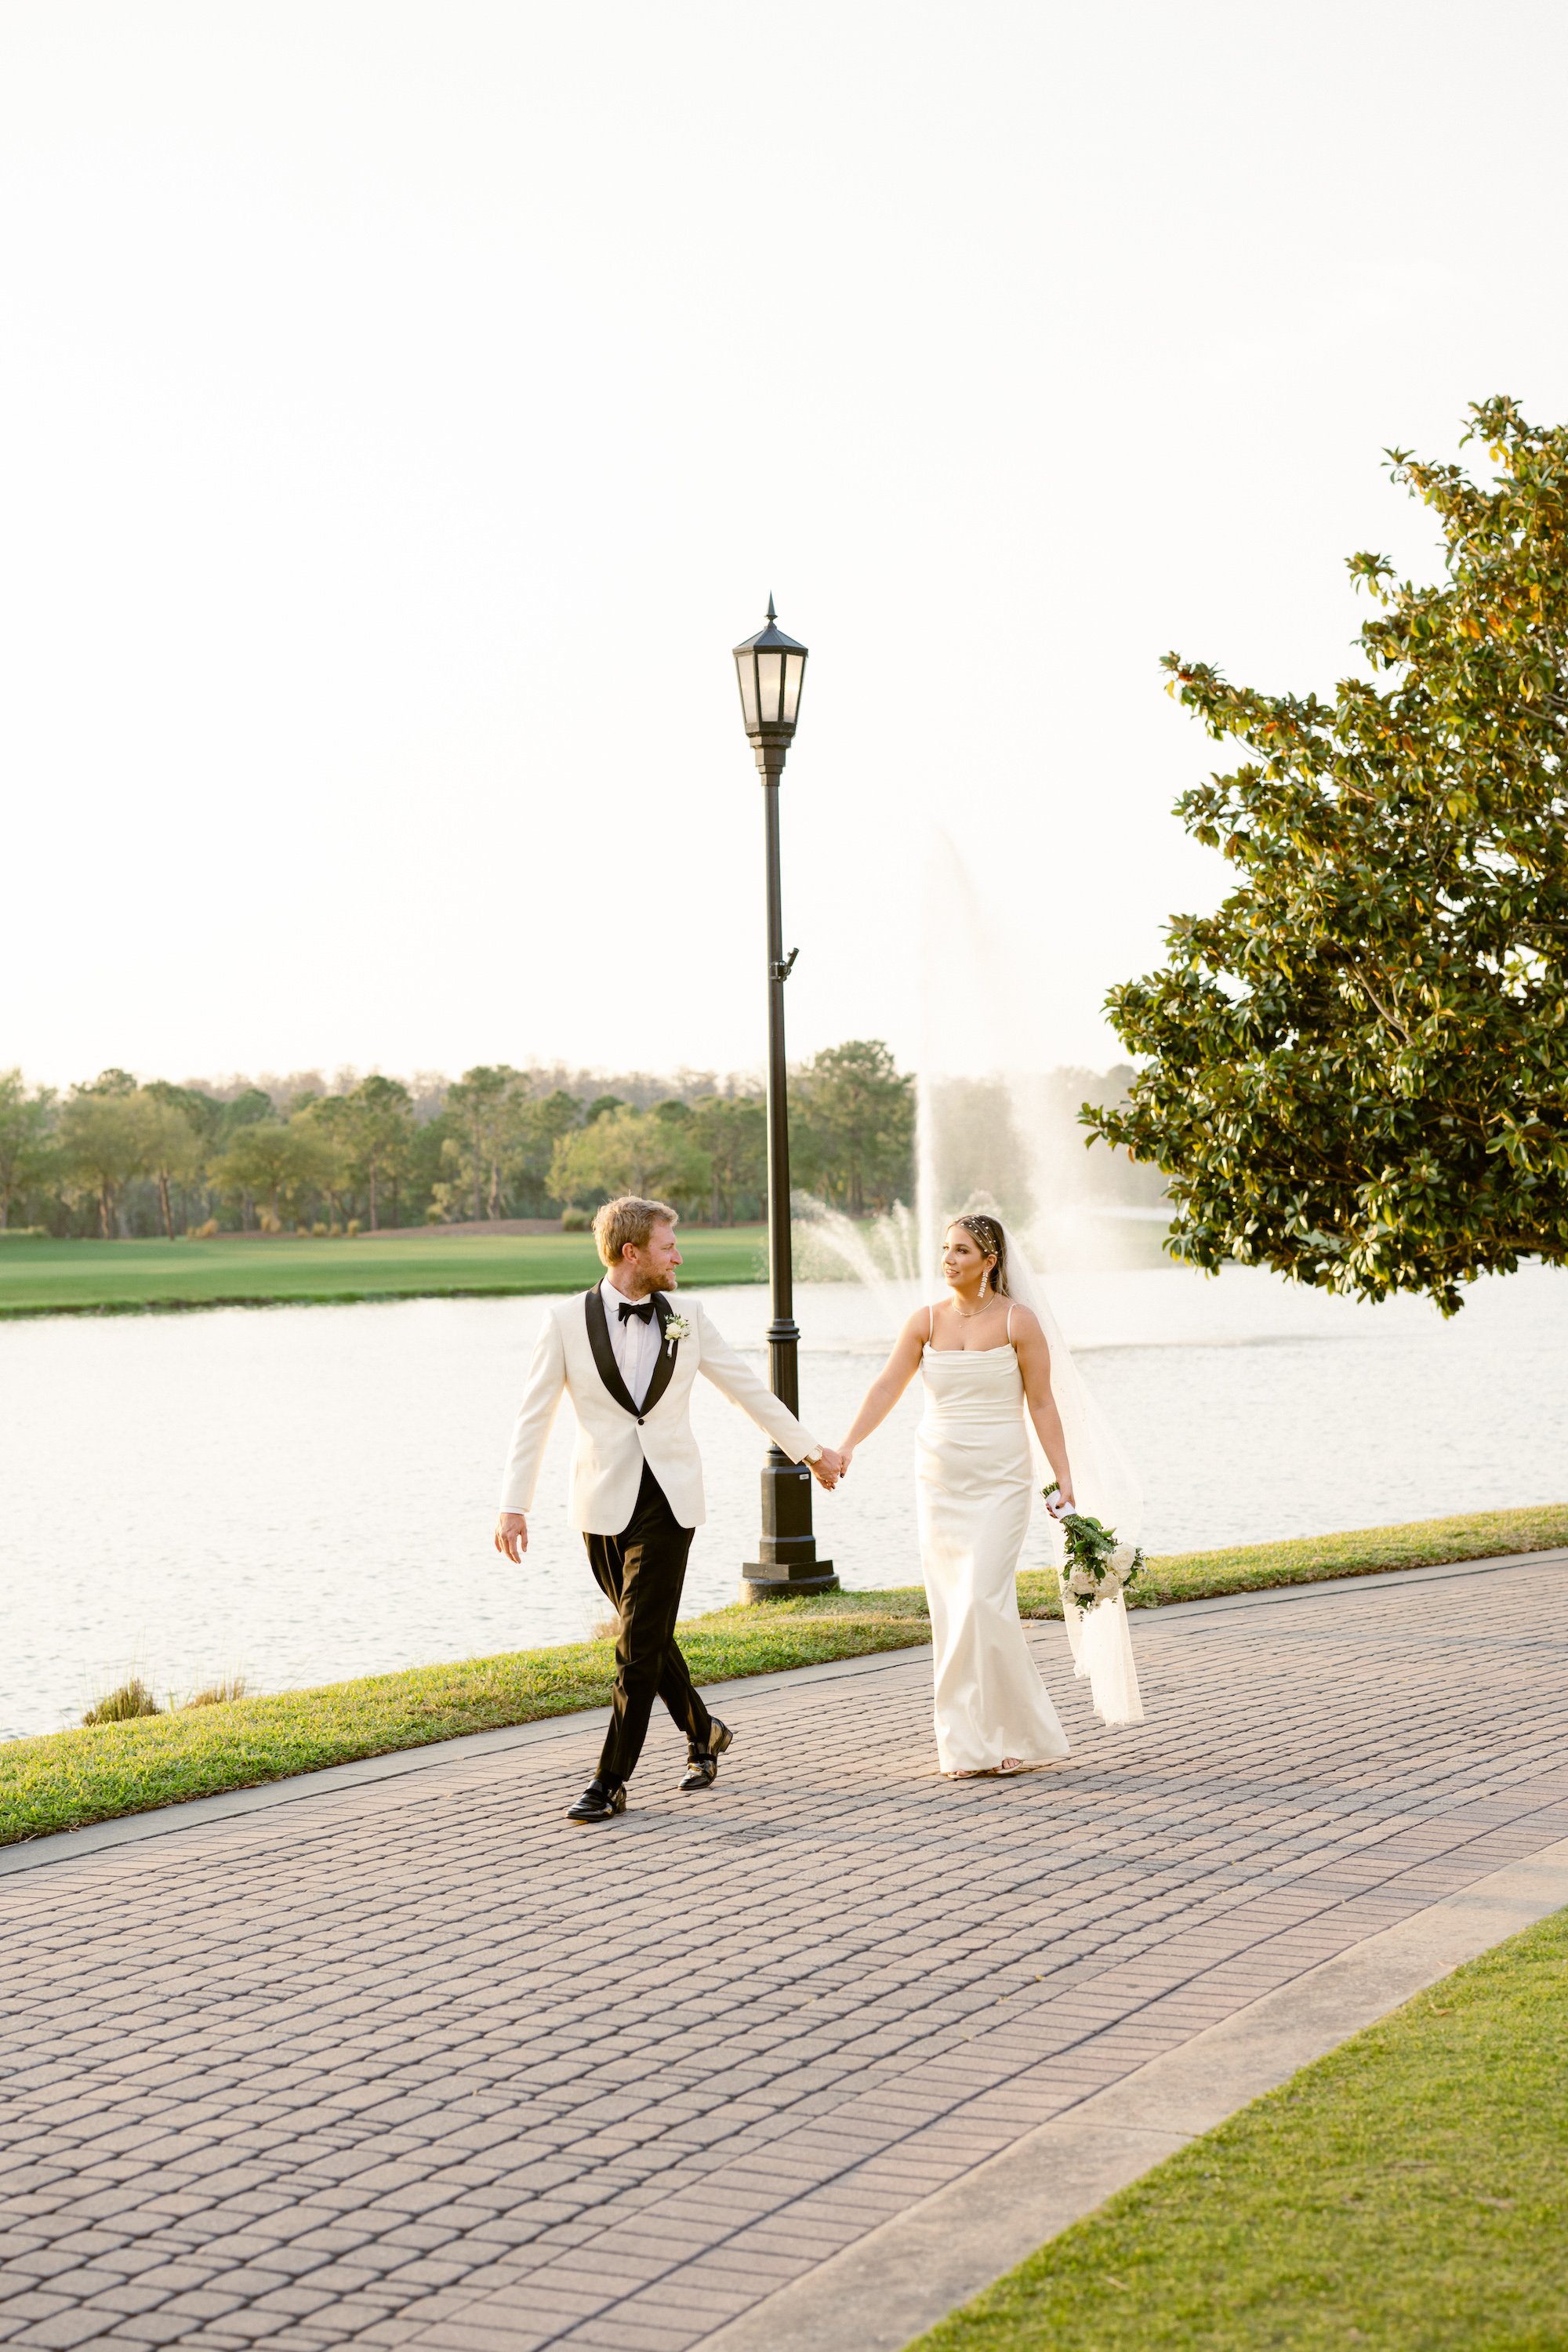 27Timeless White Courtyard Wedding | Ritz Carlton Orlando | Photographers Dewitt for Love Photography.jpg